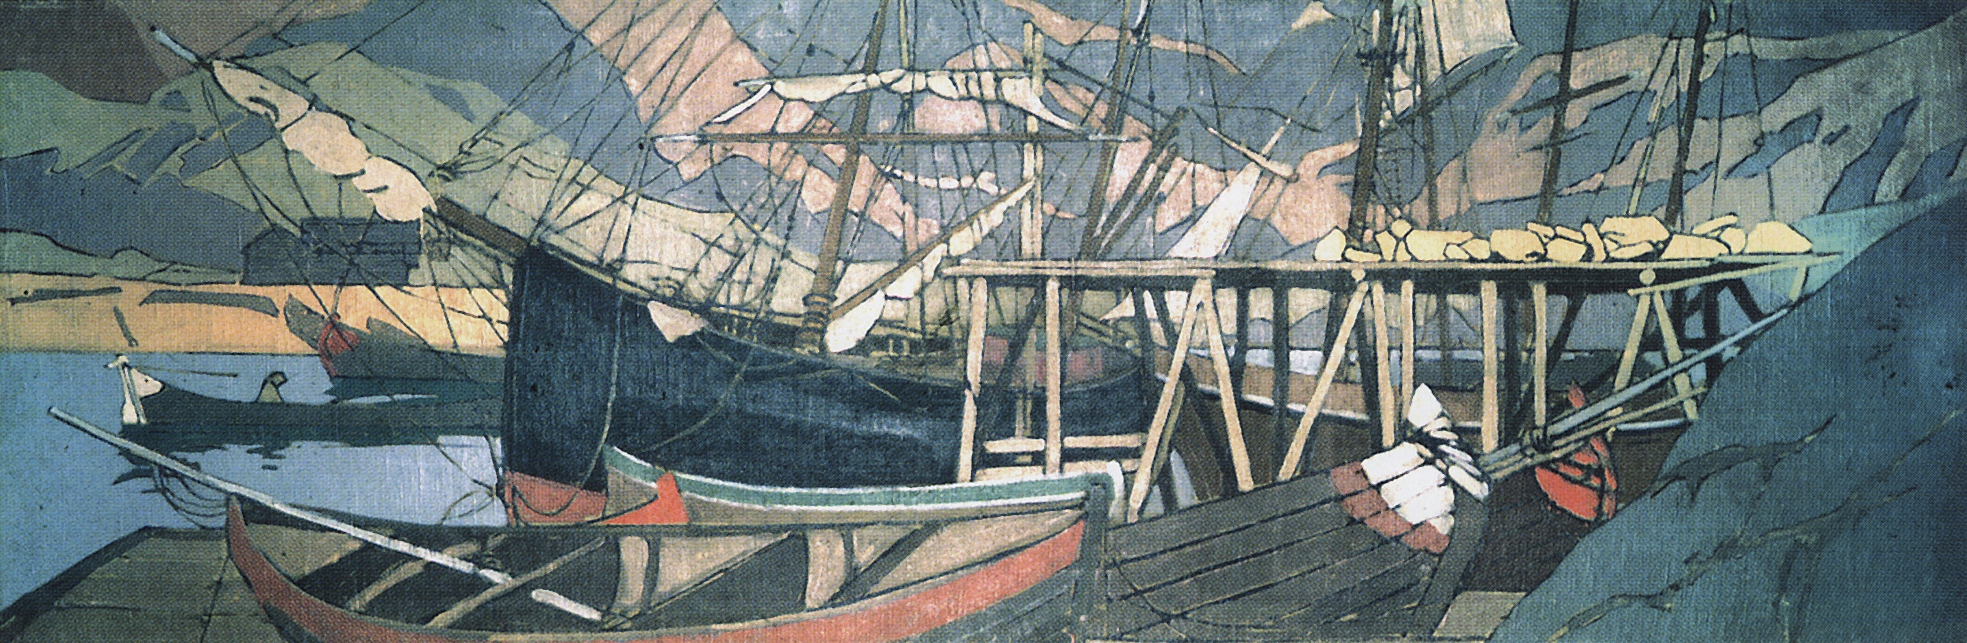 Коровин К.. У становища корабля. 1899-1900